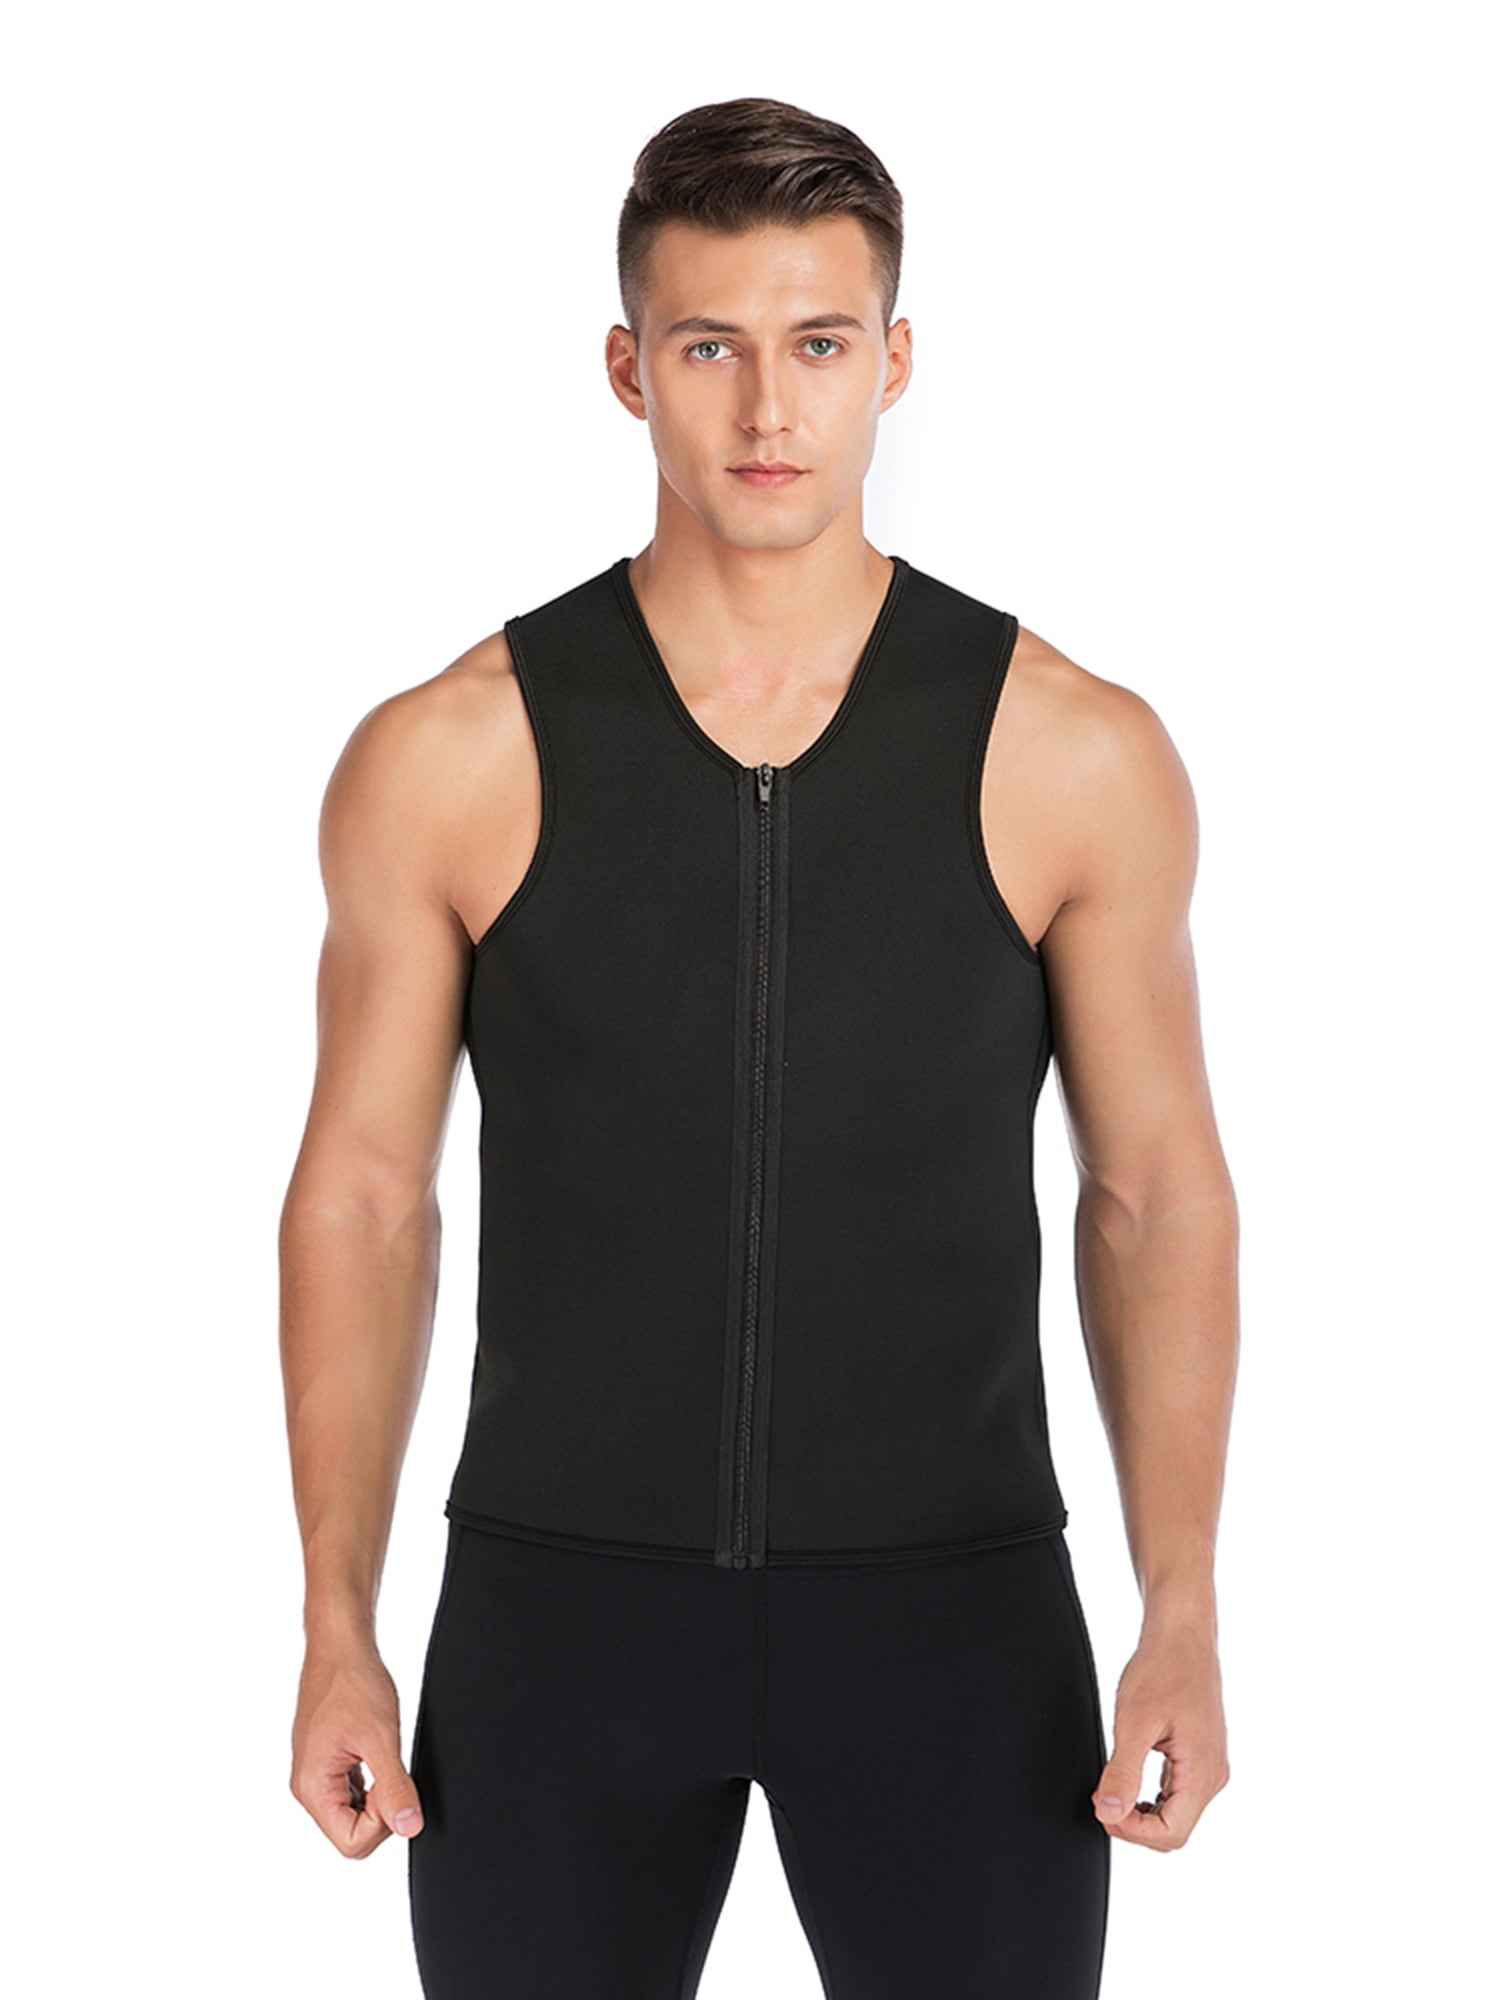 DODOING Men Sauna Sweat Zipper Vest for Weight Loss Hot Neoprene Corset Waist Trainer Body Top Shapewear Slimming Shirt Workout Suit